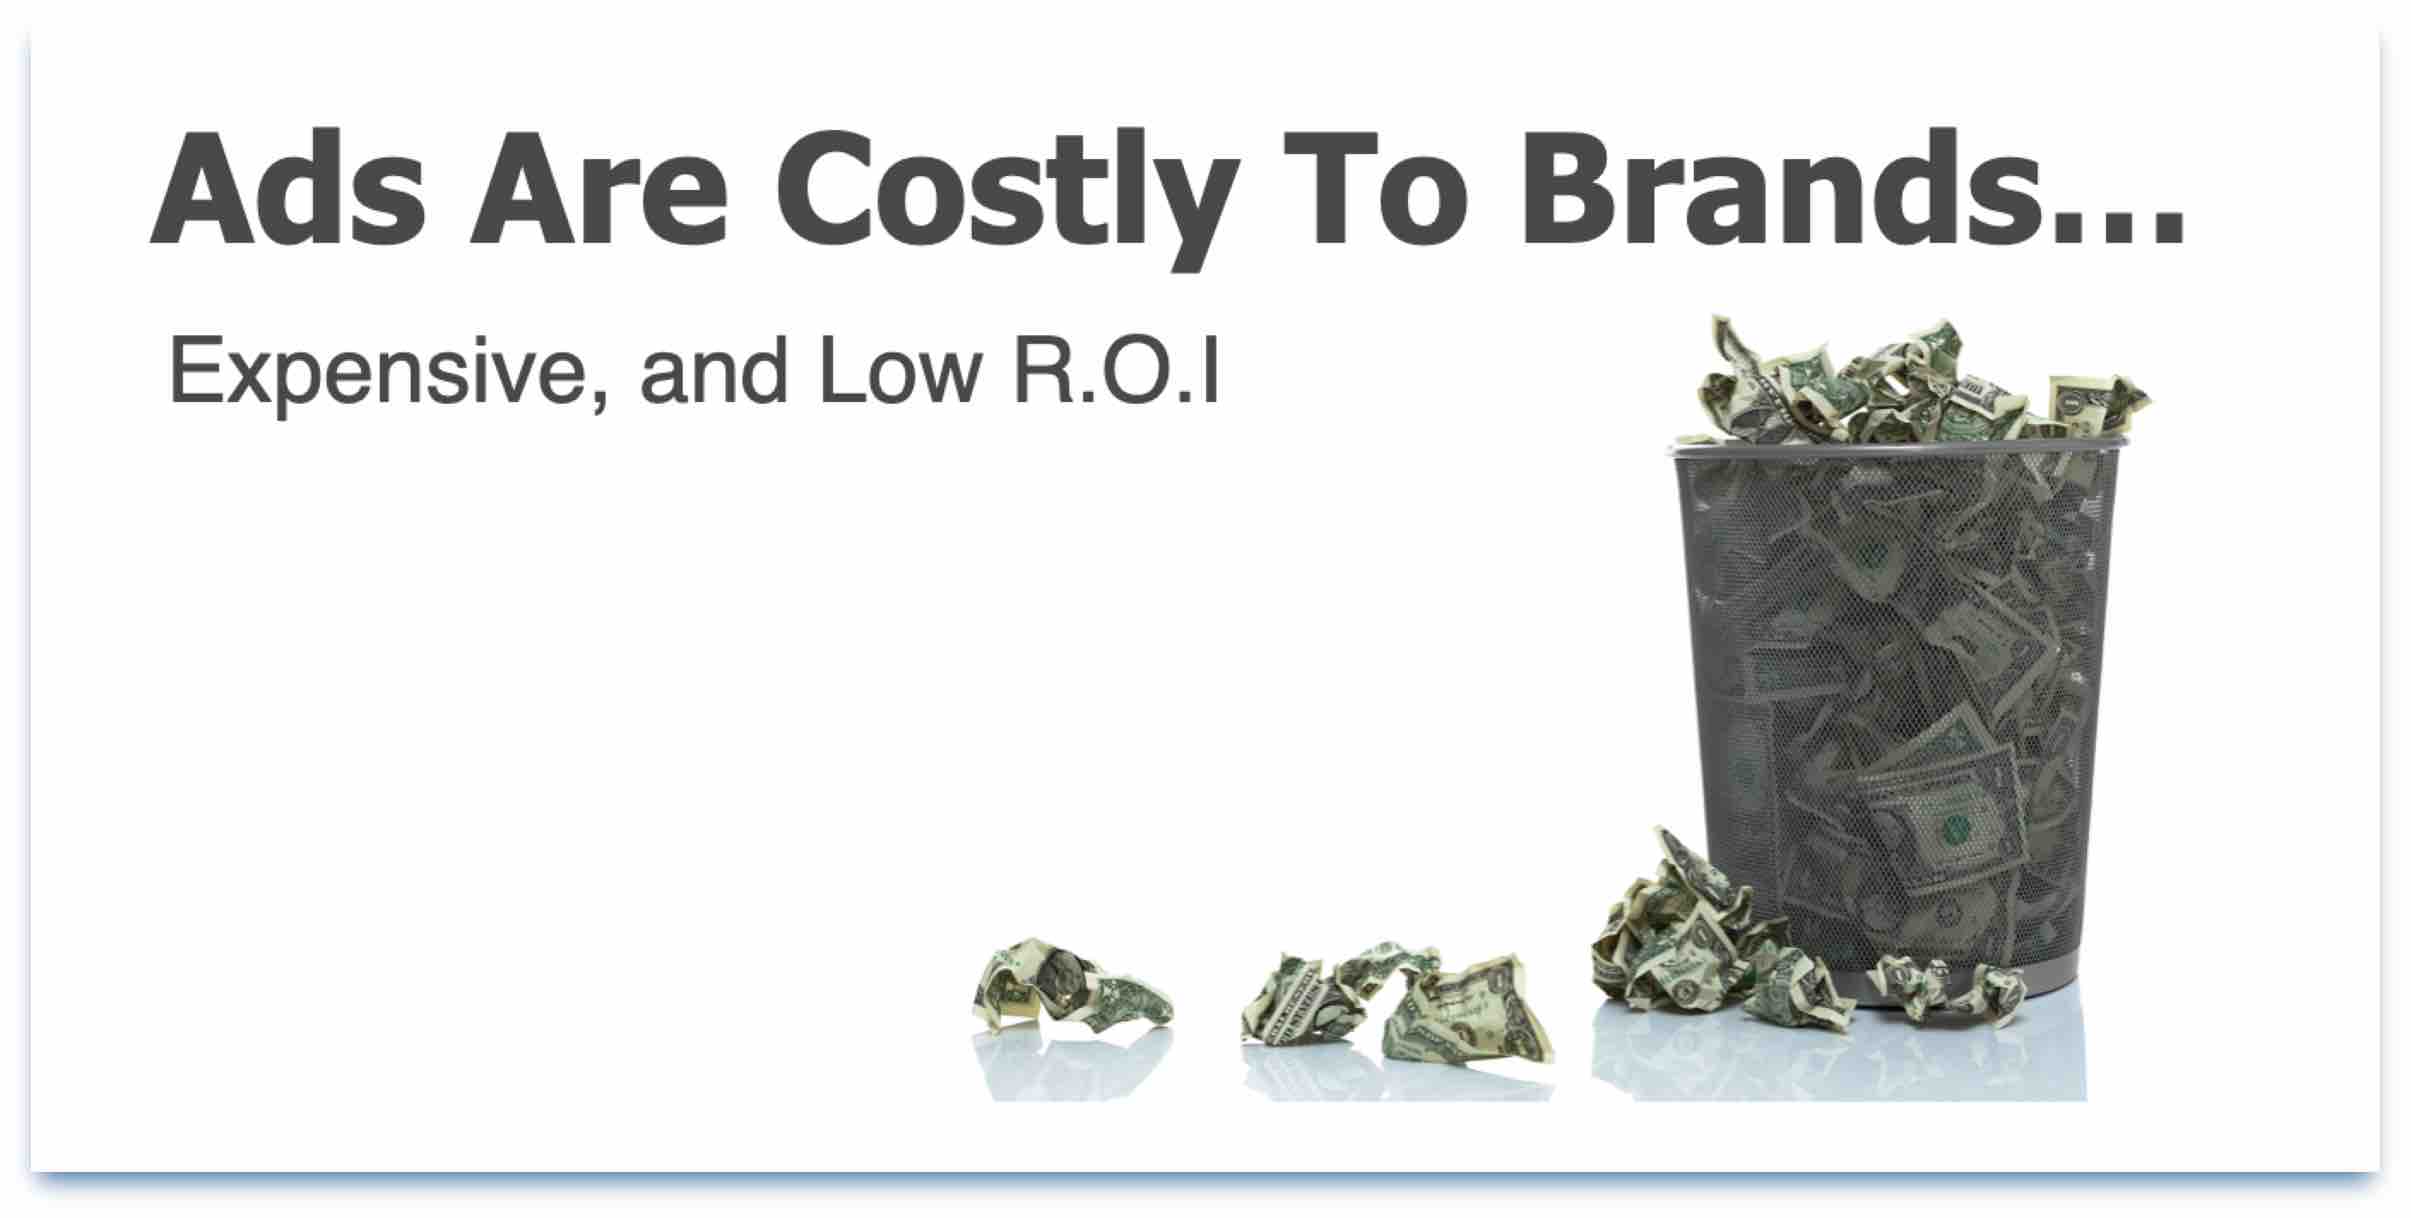 Brand deals cut advertising costs